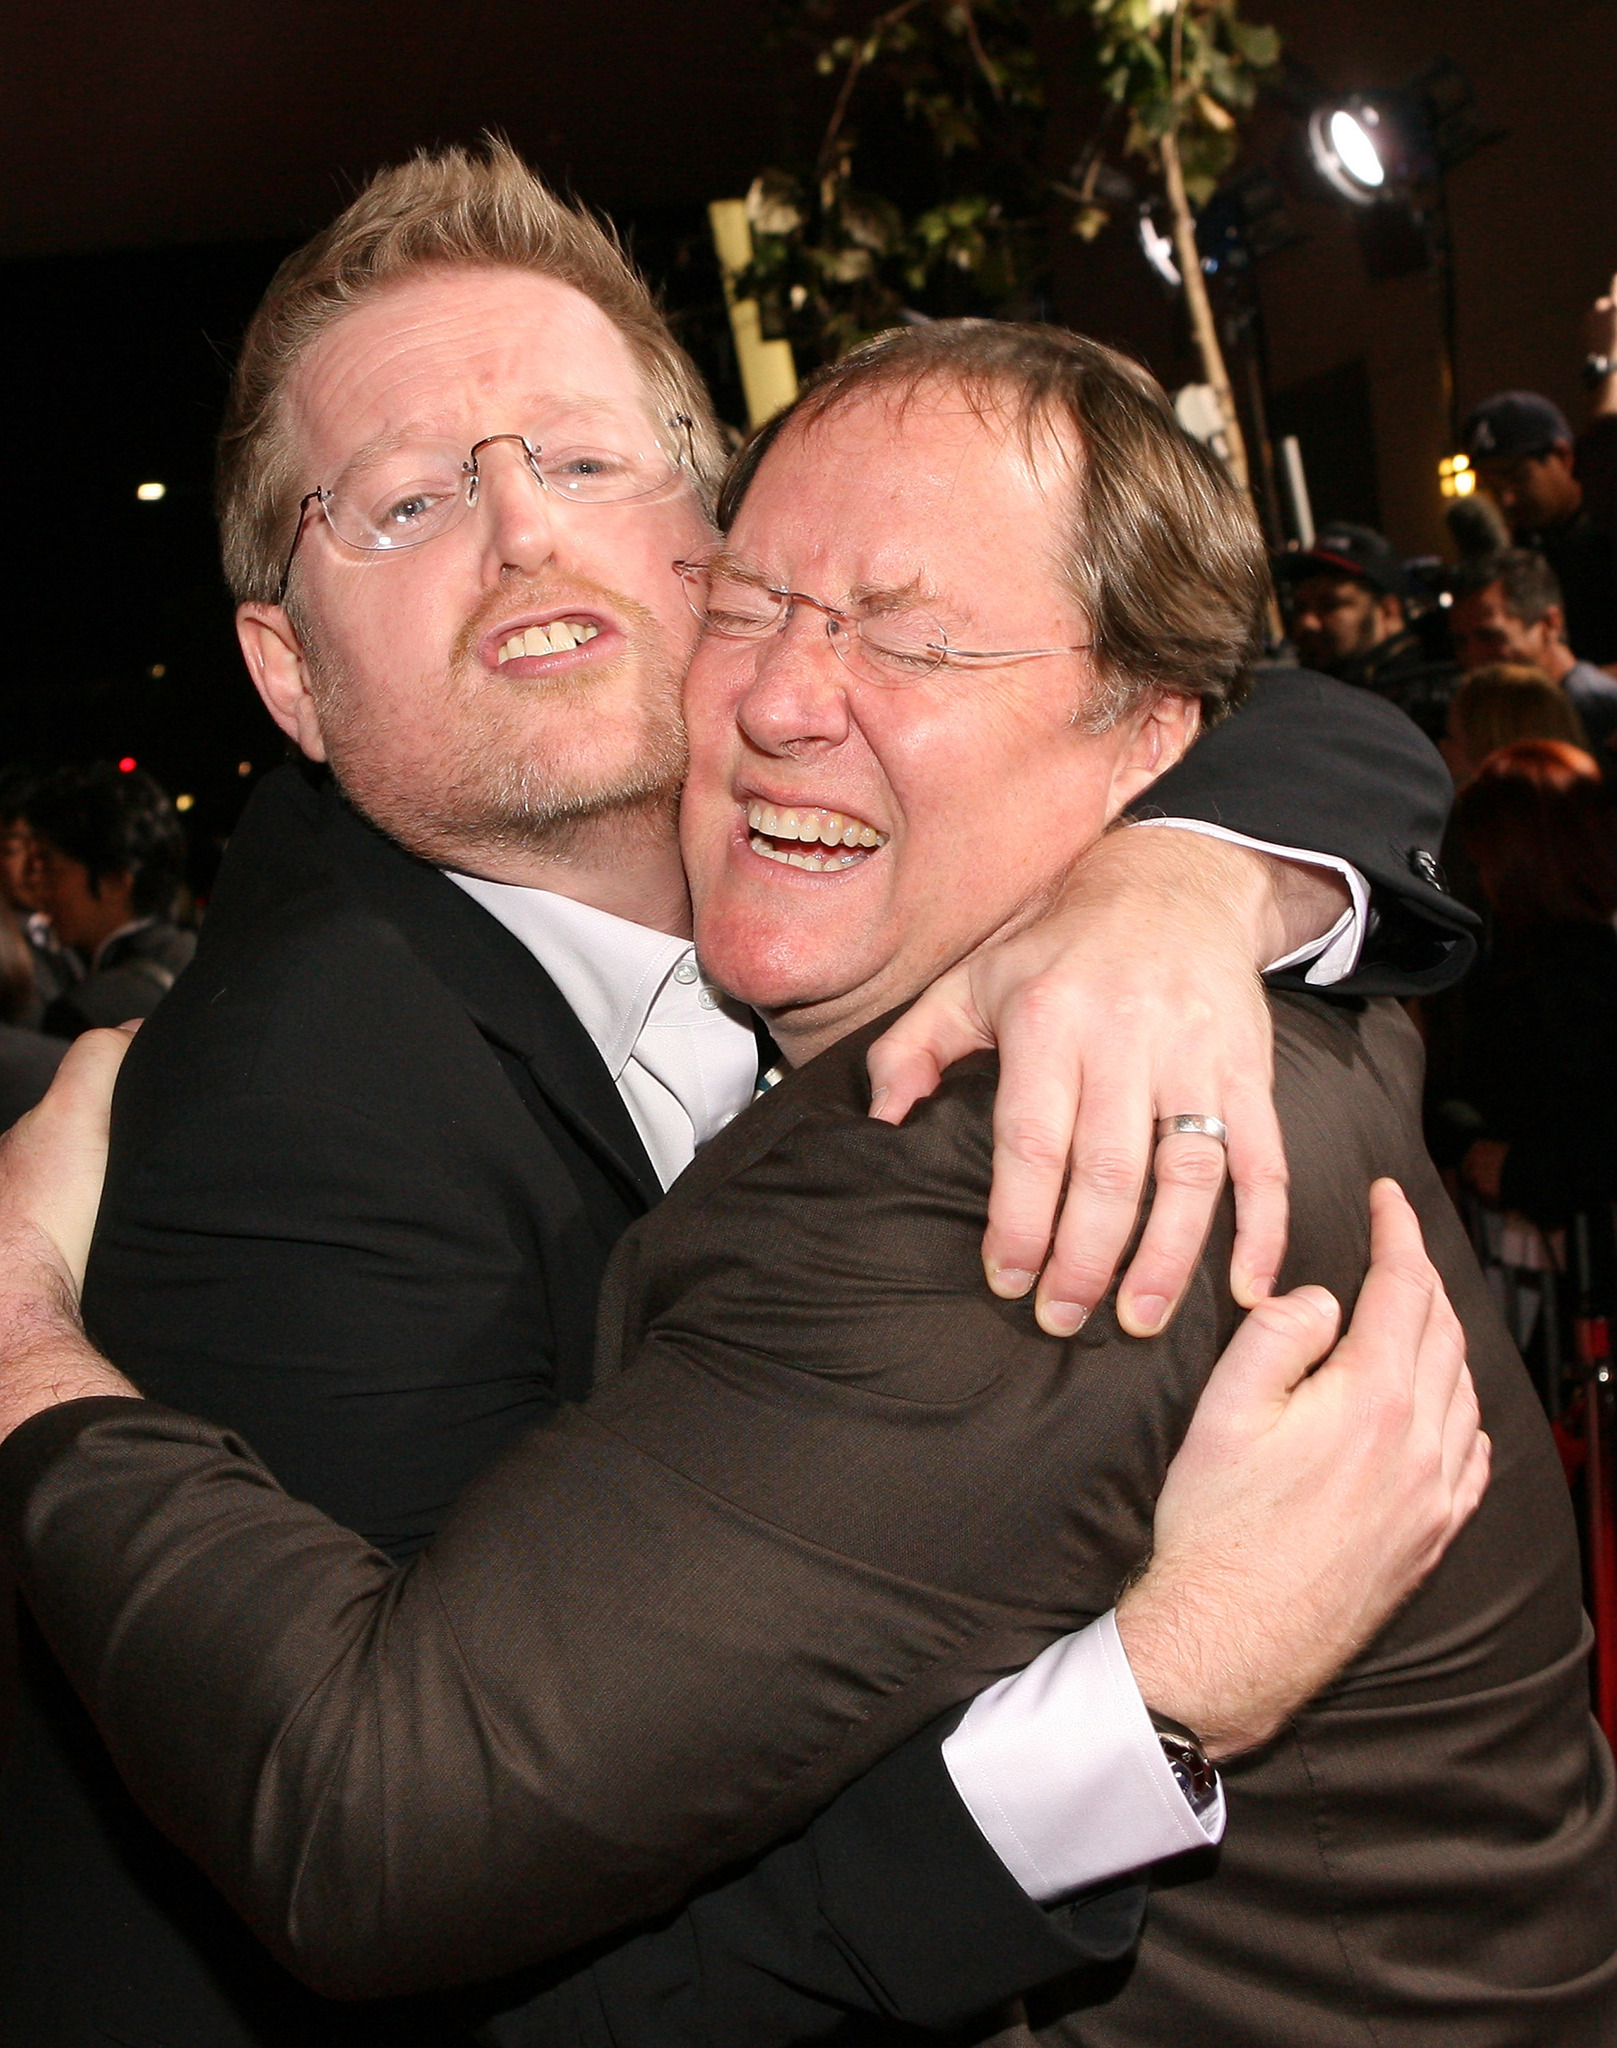 Andrew Stanton and John Lasseter at event of Dzonas Karteris (2012)